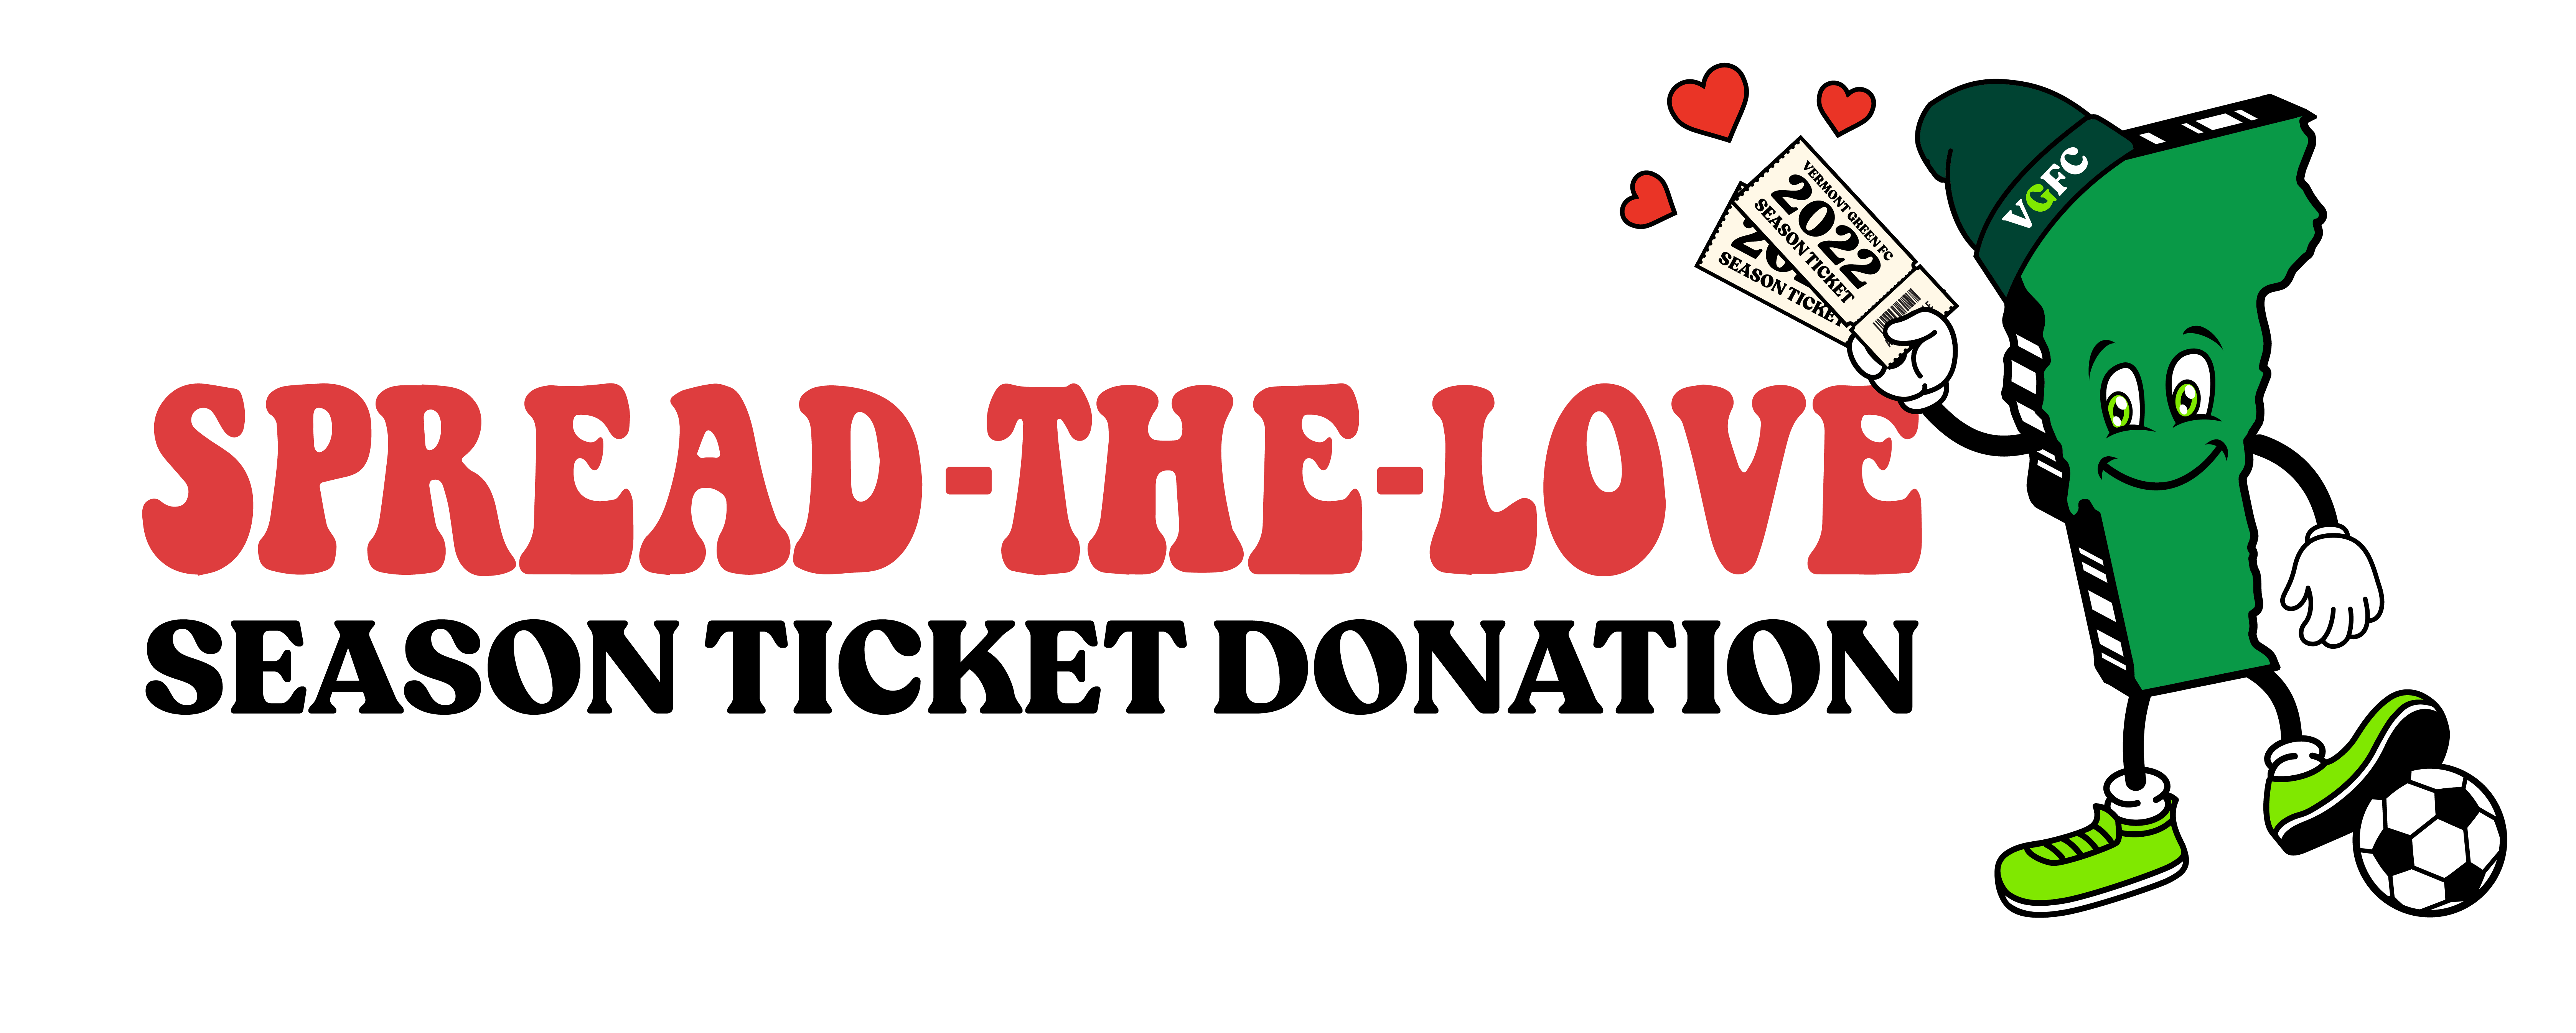 Vermont green fc, spread the love season ticket